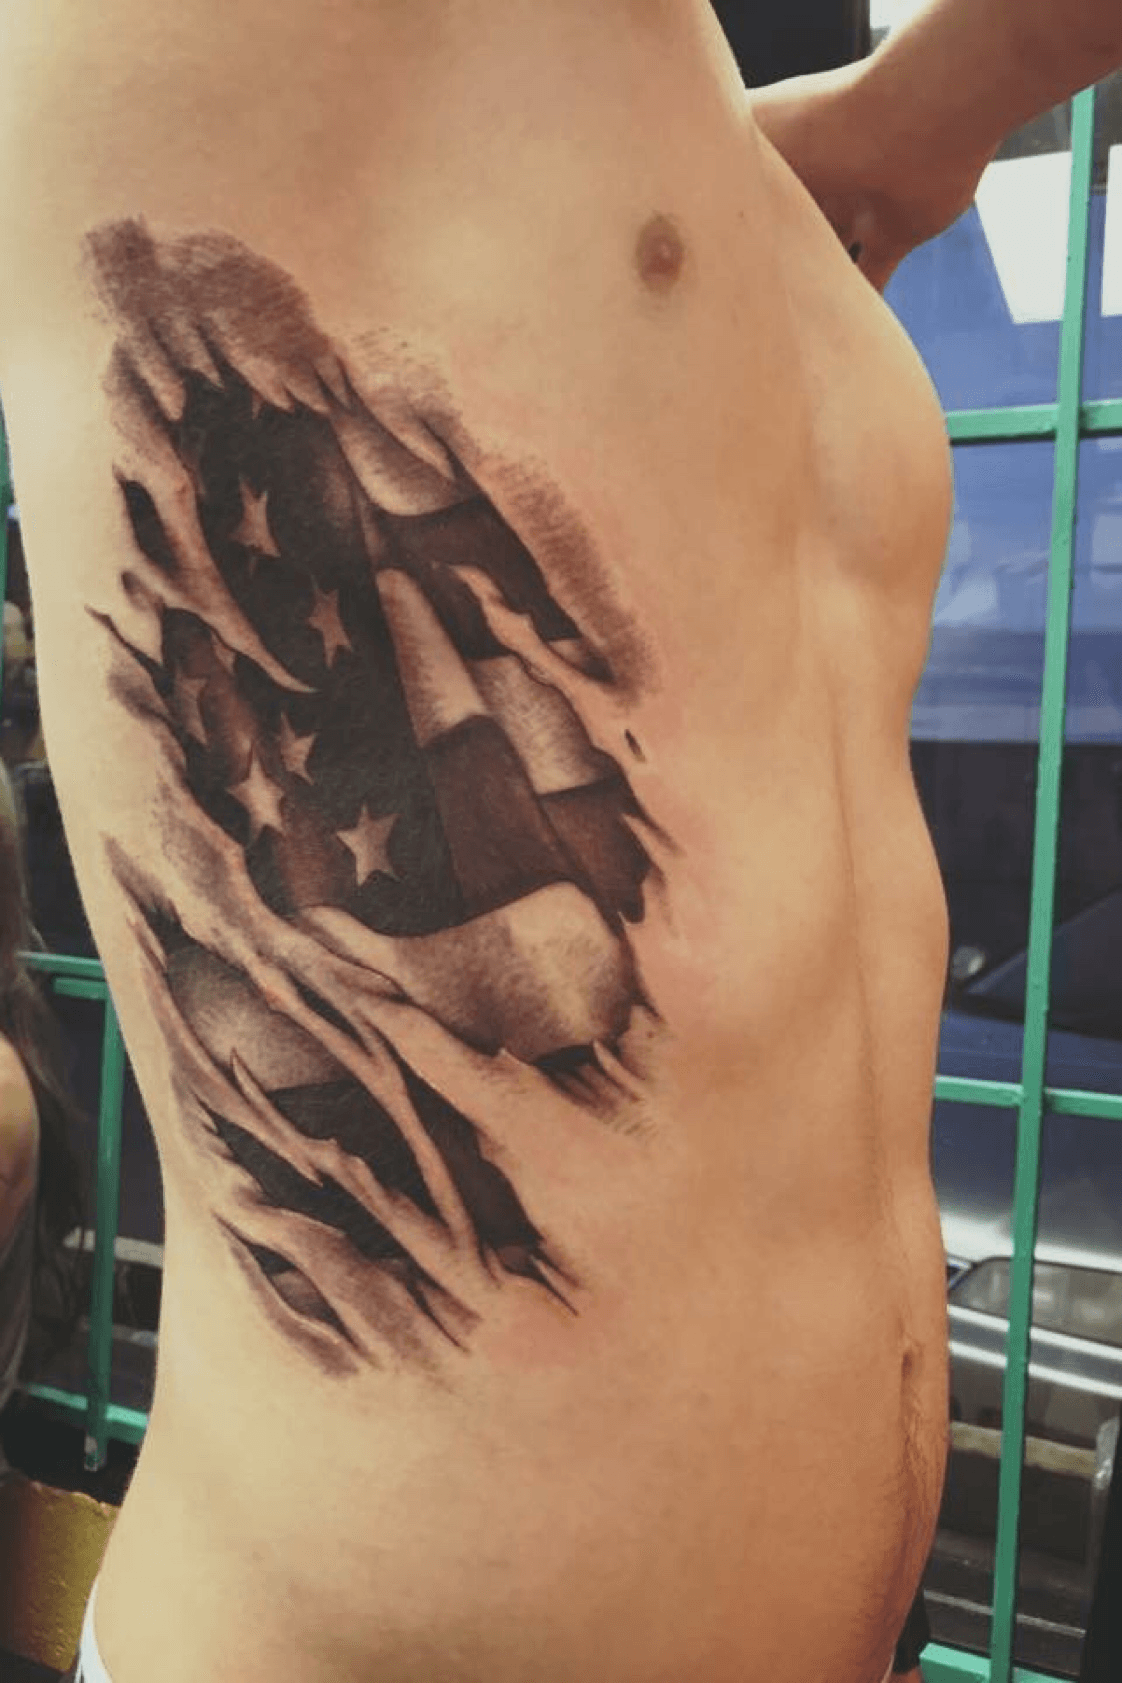 Top 30 American Flag Tattoo Design Ideas Sleeve Back Black And White   Saved Tattoo